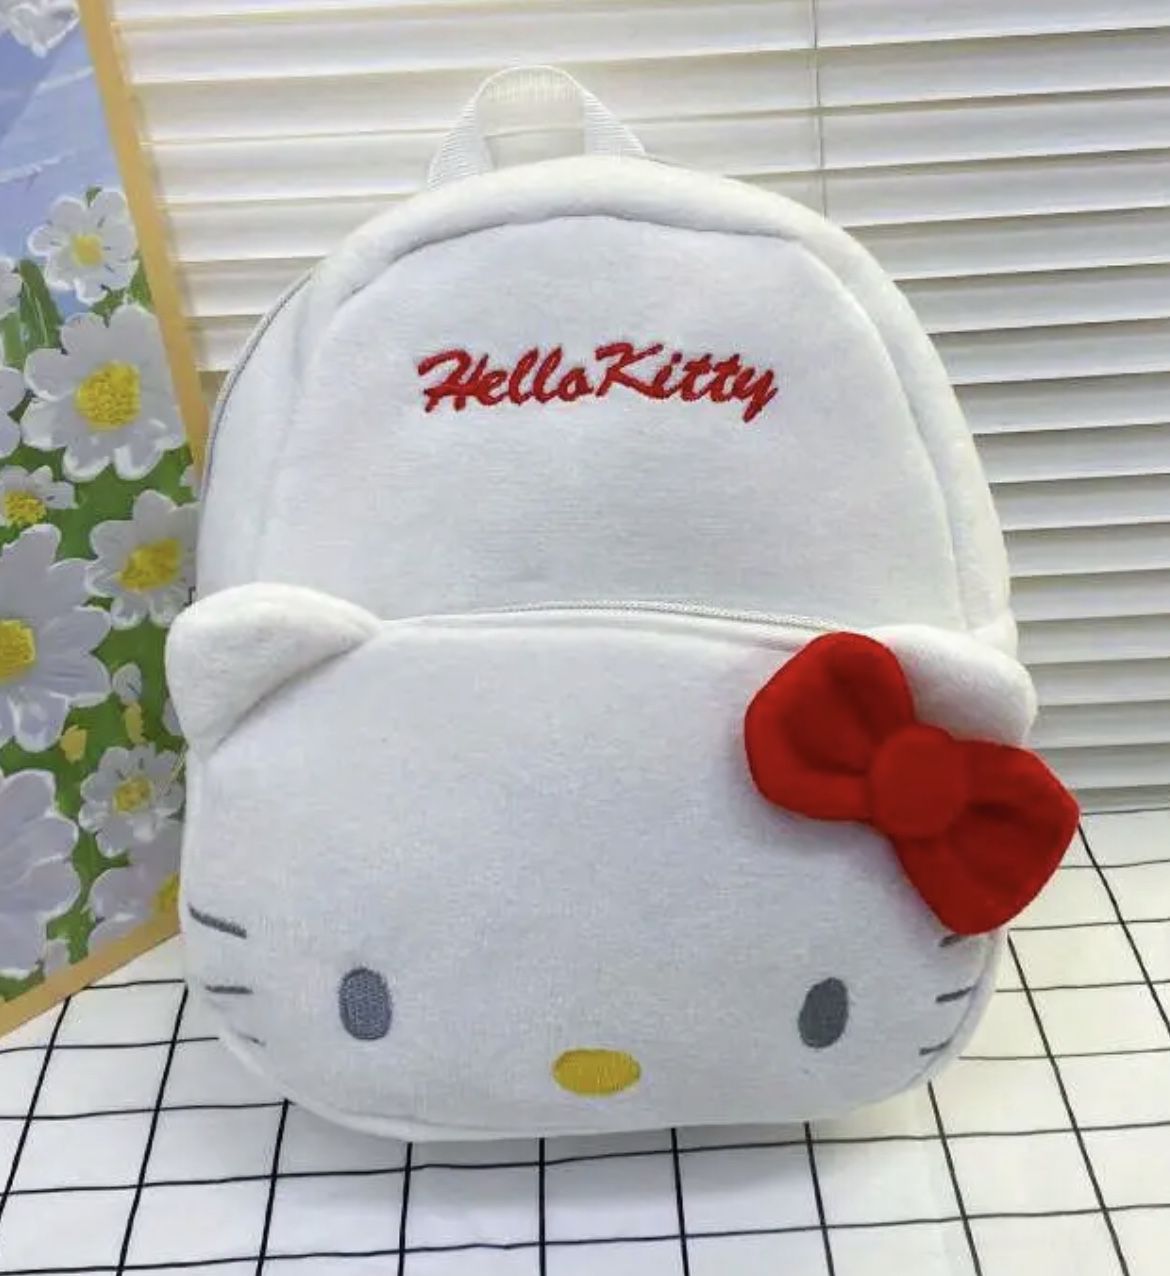 Hello kitty plushy backpack